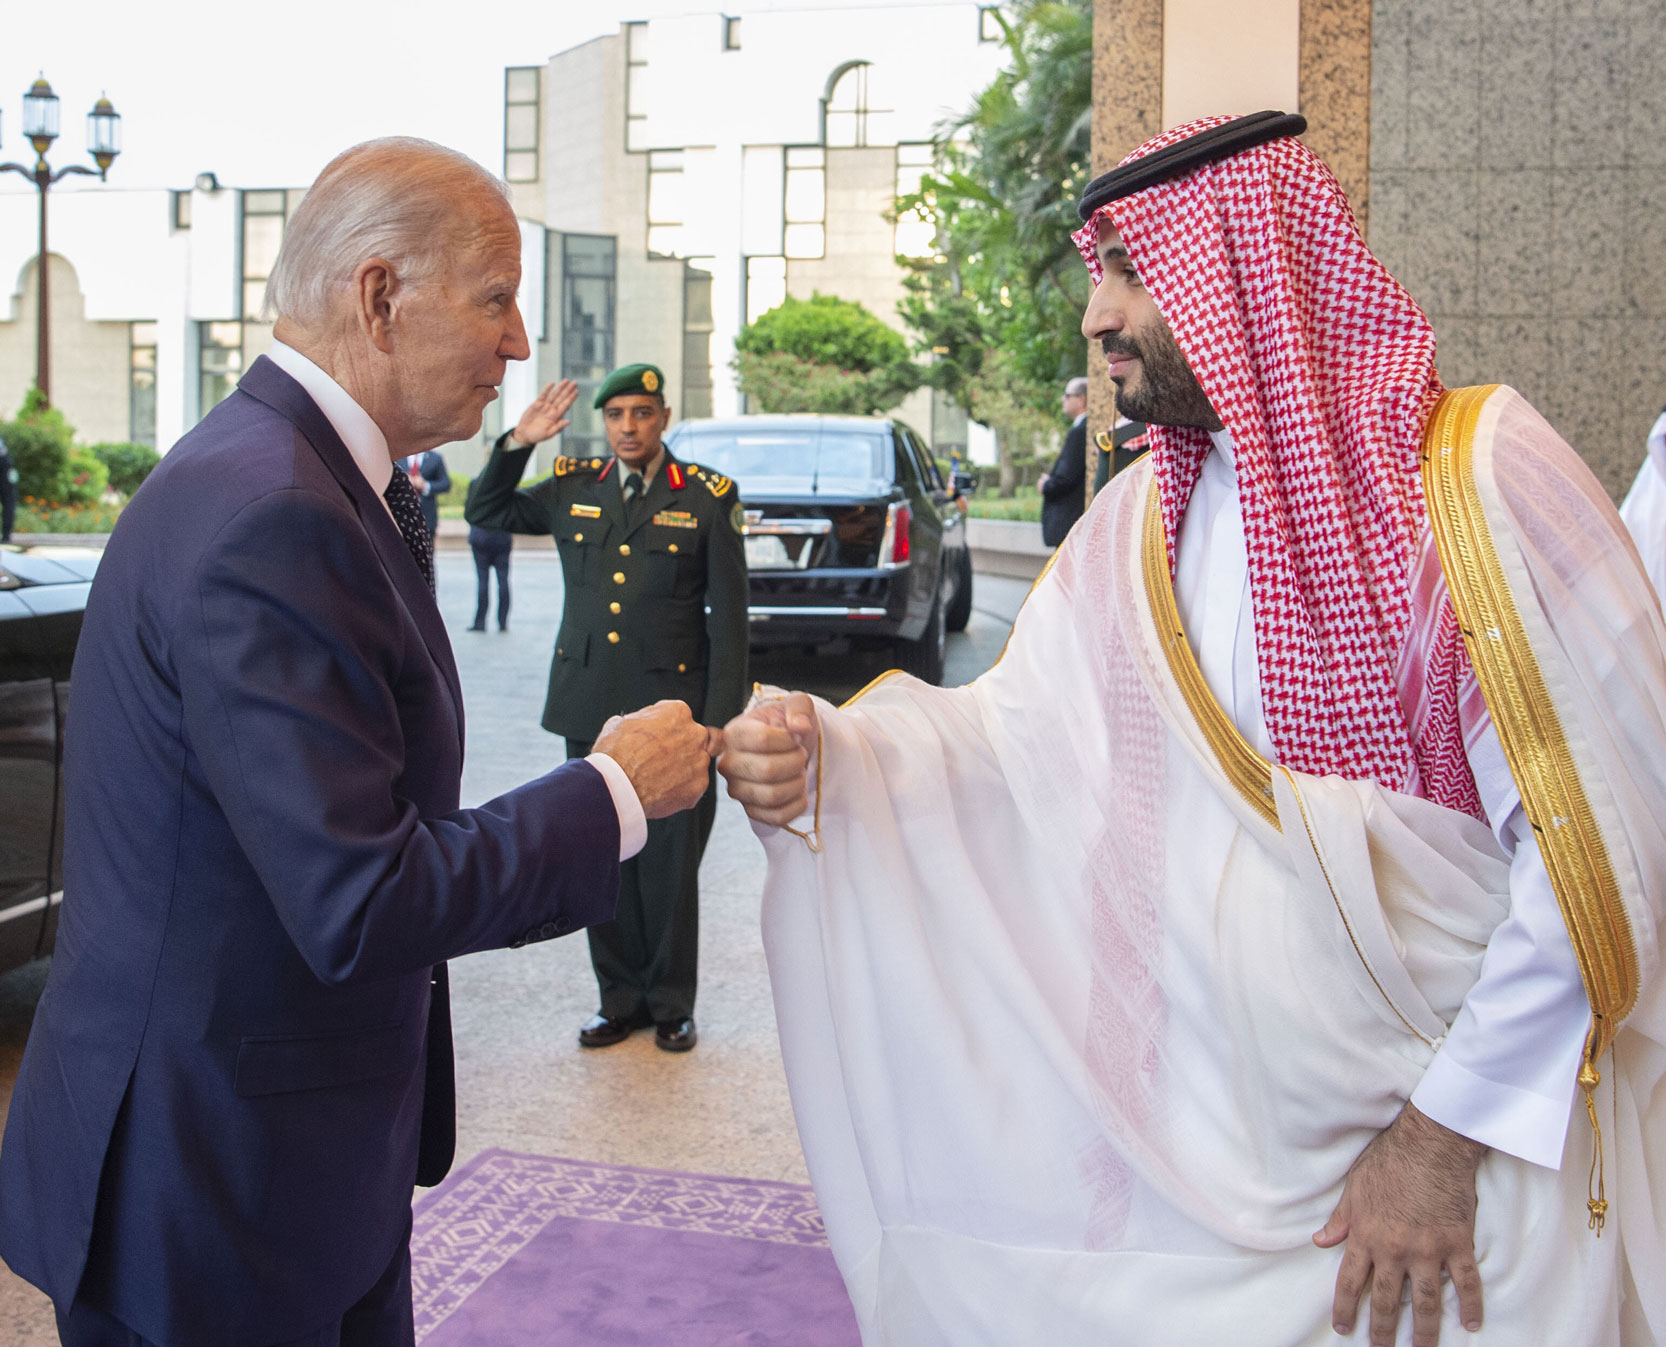 Biden’s Bumpy Visit to Saudi Arabia Exposes U.S. Limits